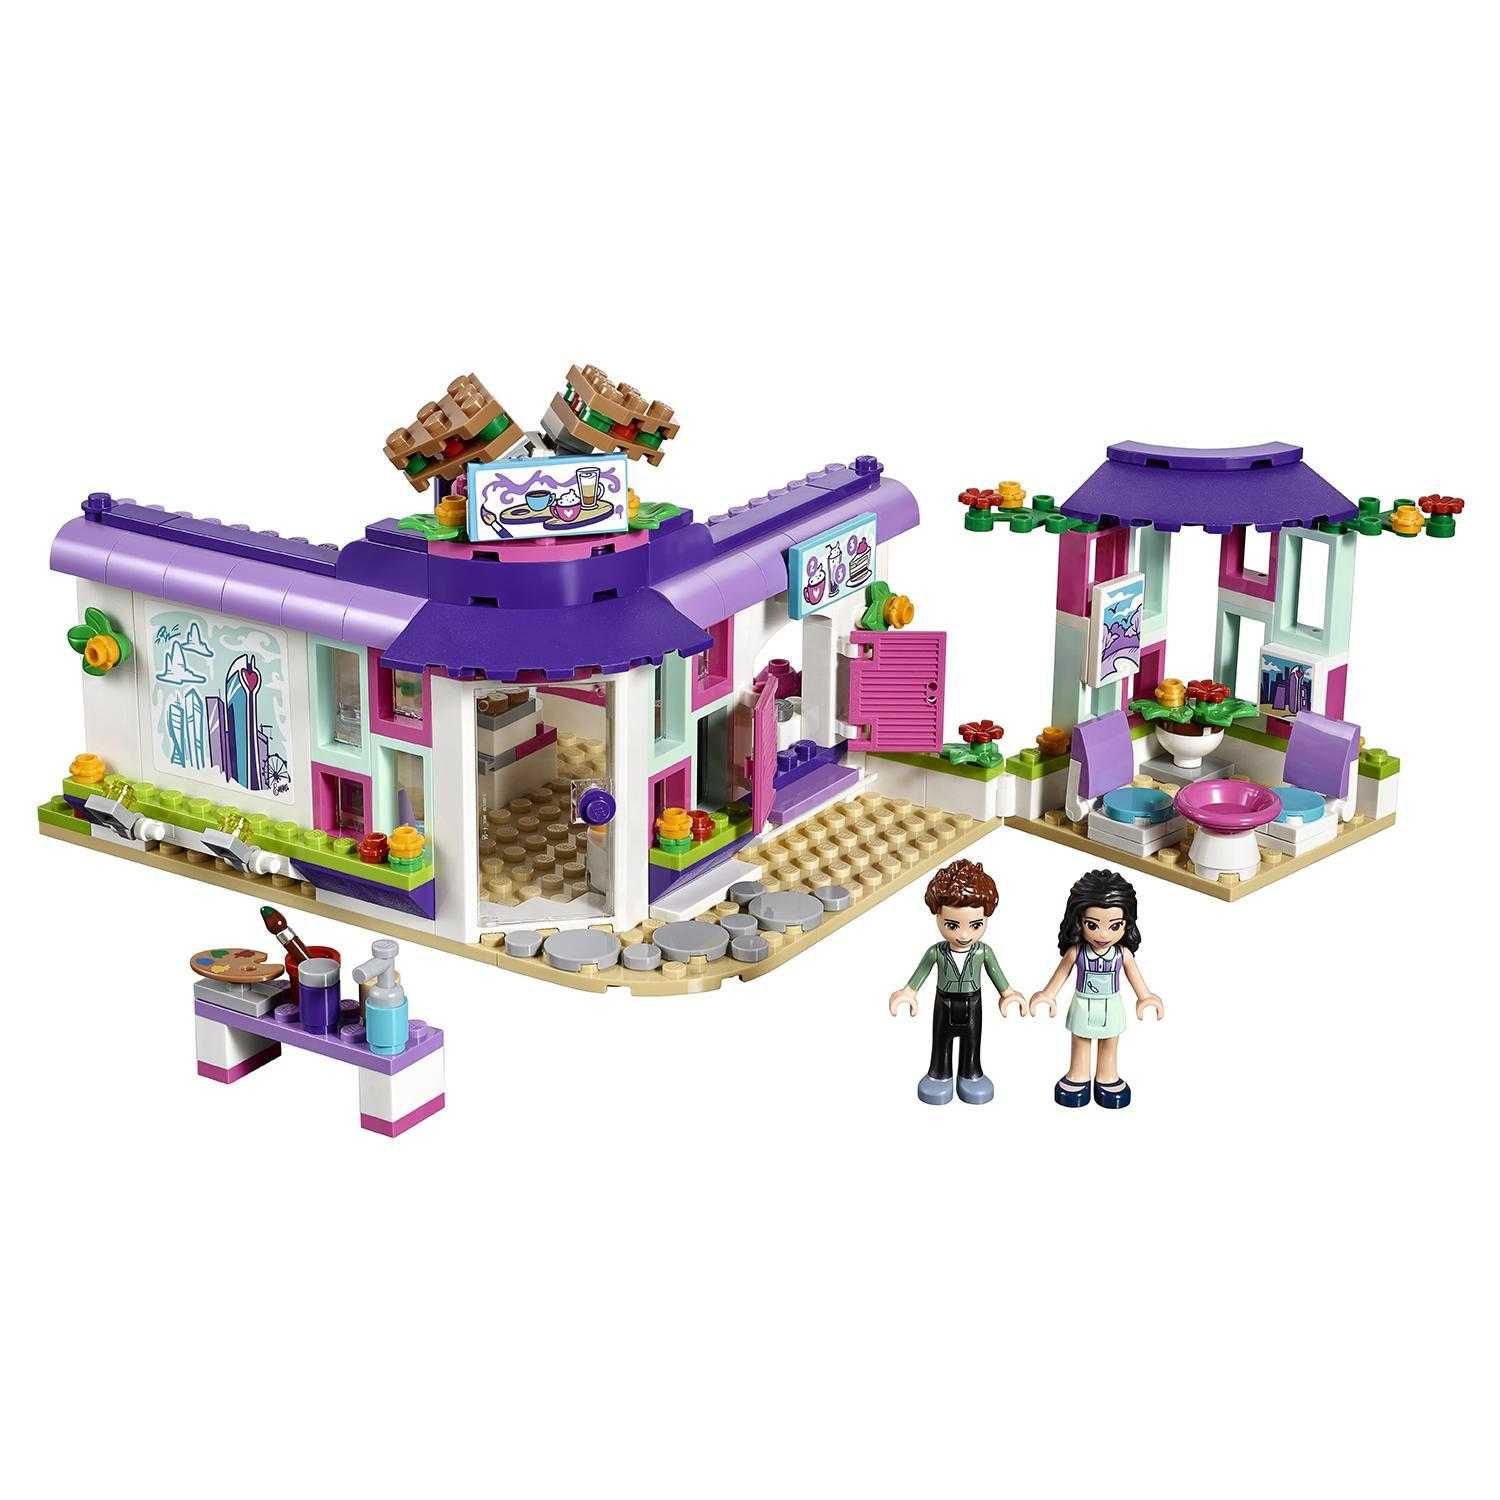 LEGO Friends: Арт-кафе Эммы 41336 конструктор игрушка